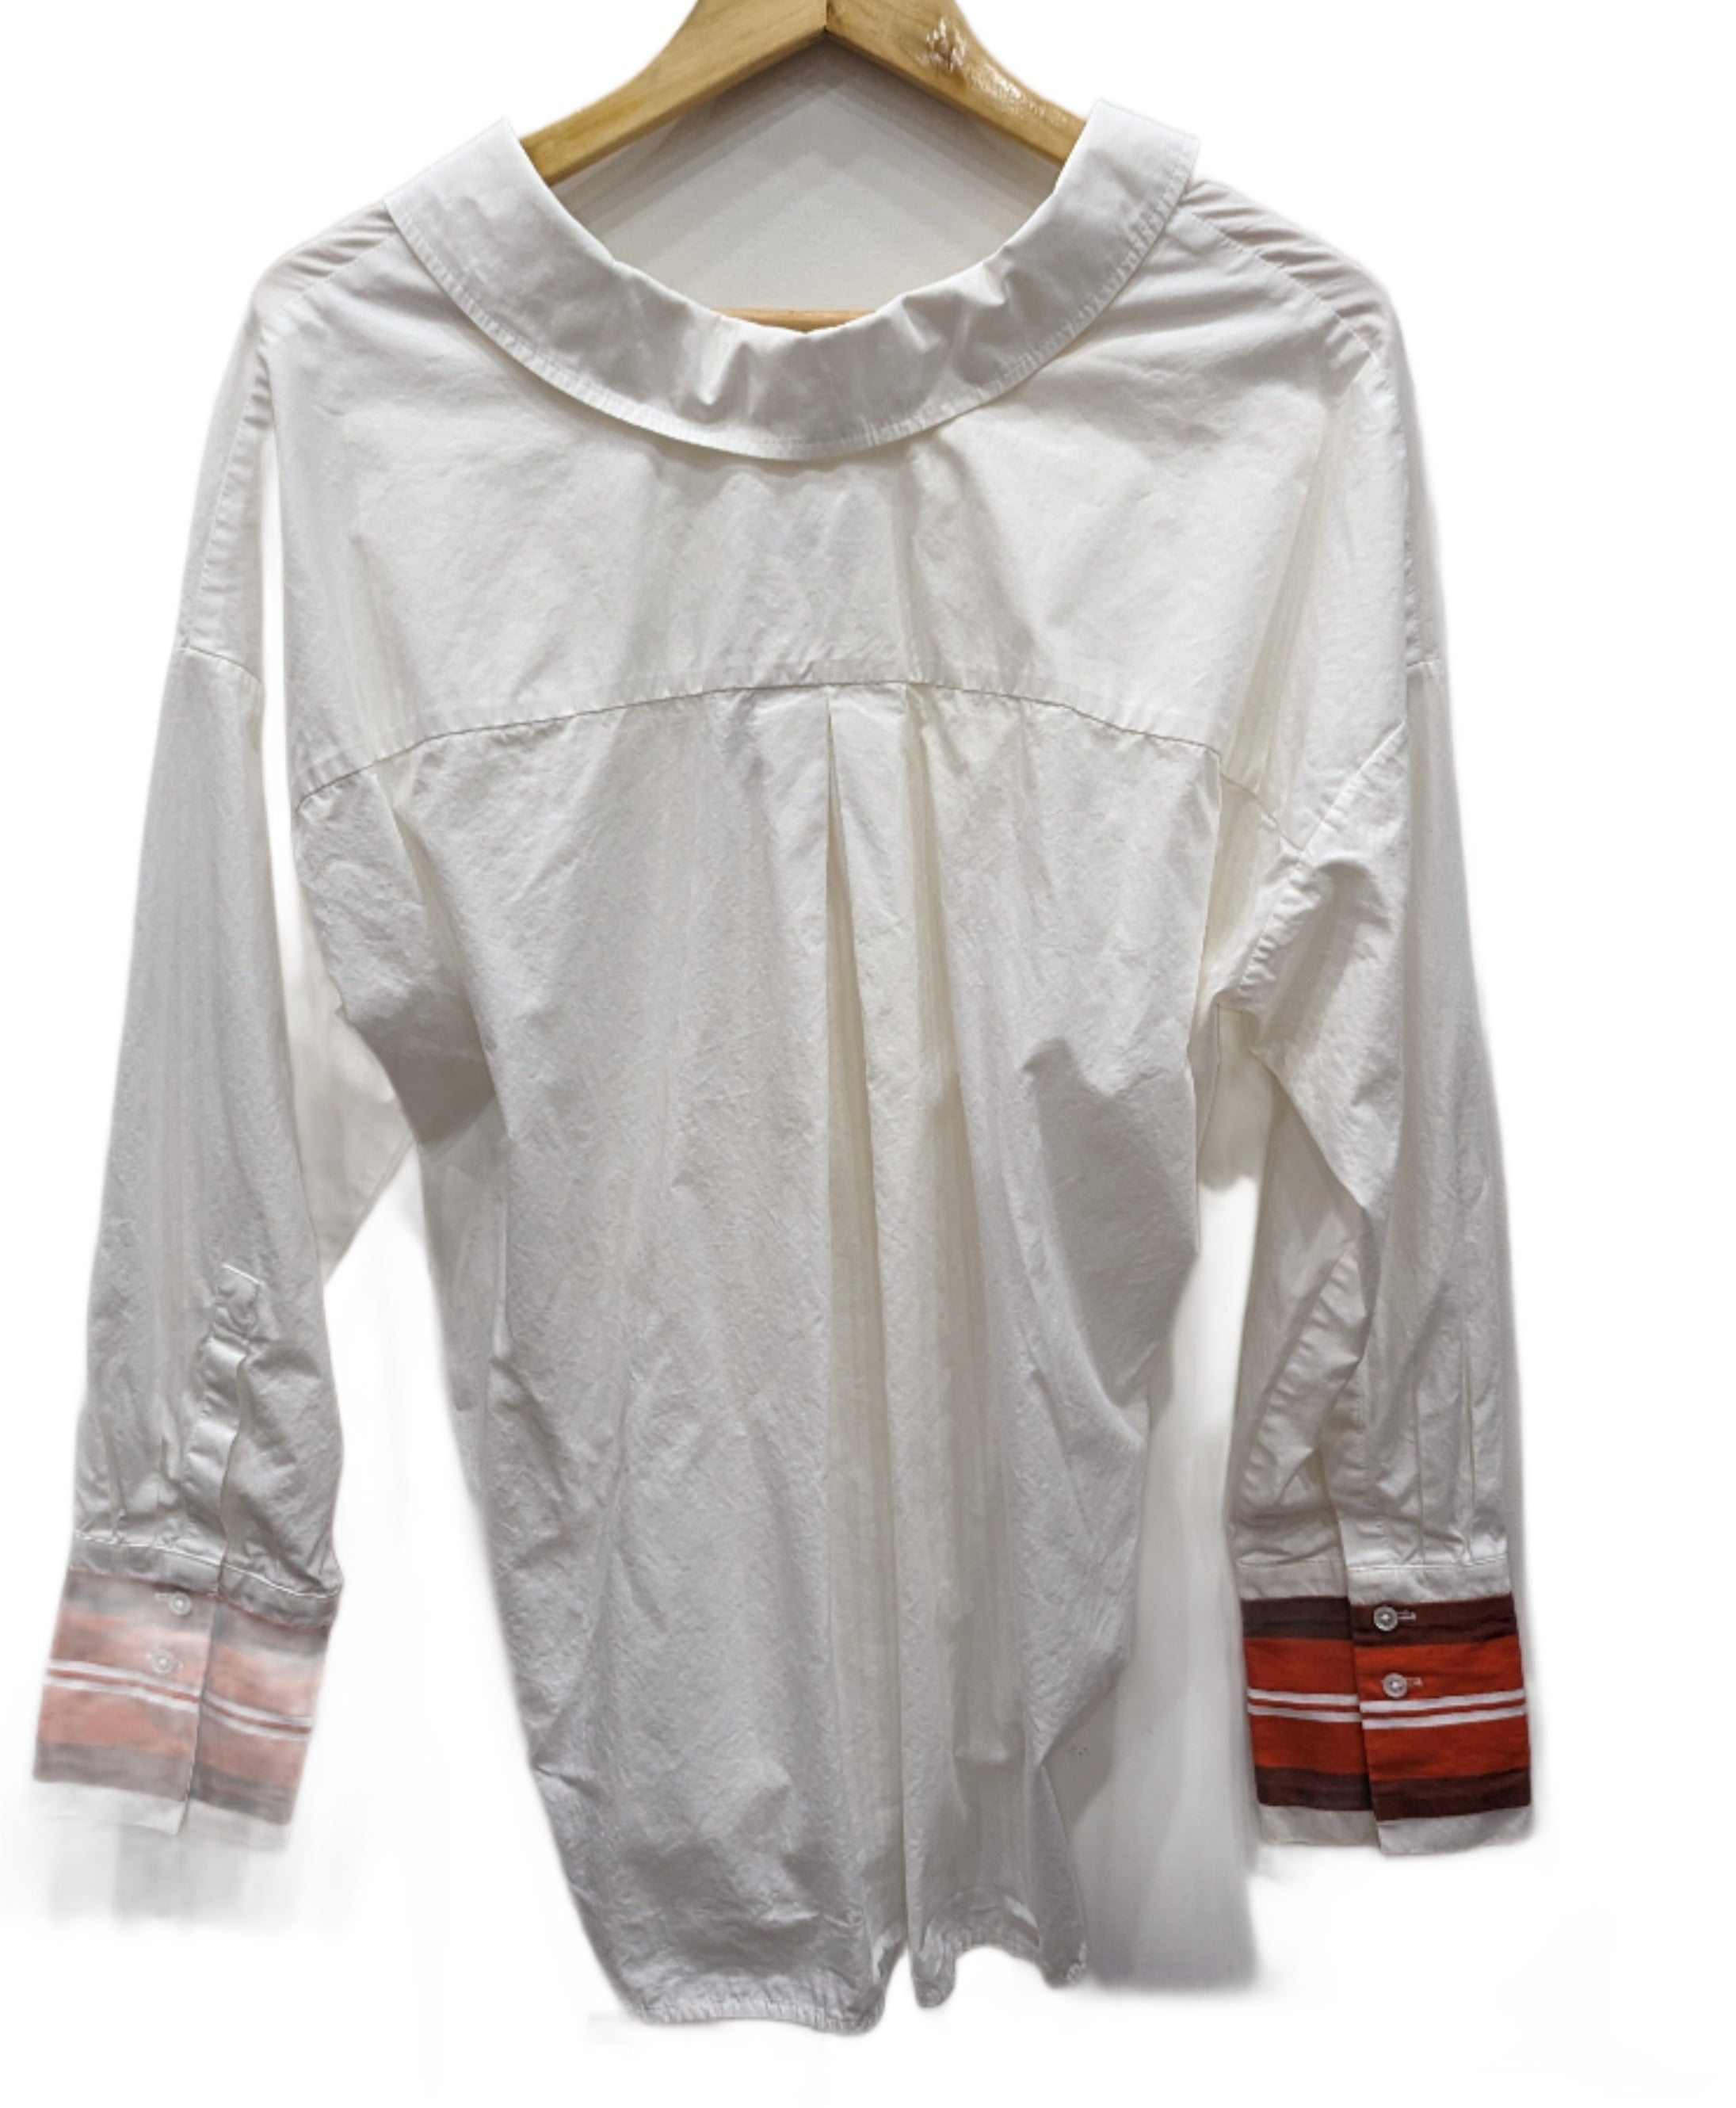 Scanlan Theodore White Lace Up Shirt